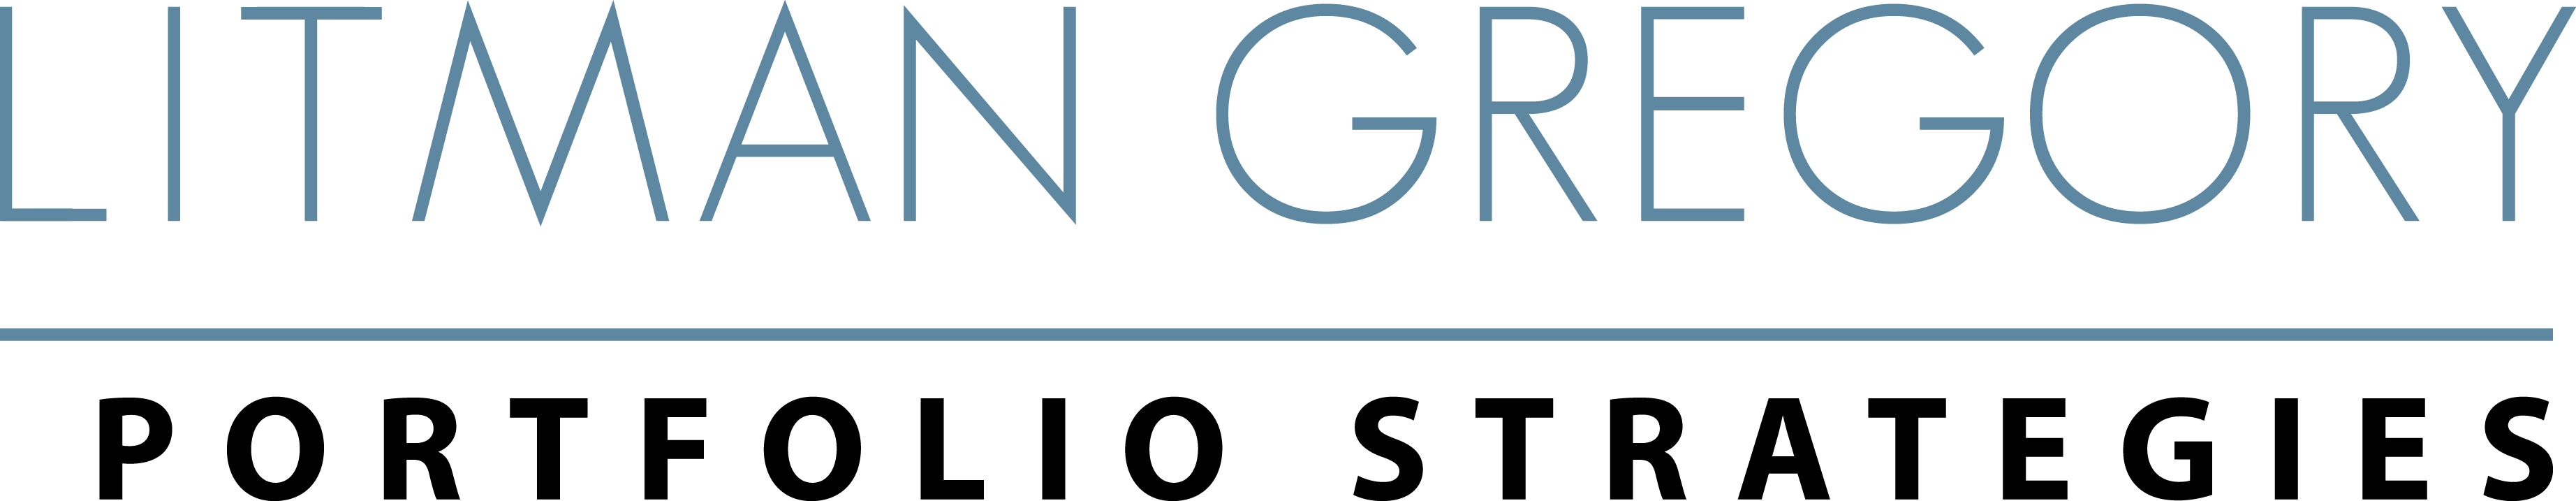 gregory logo